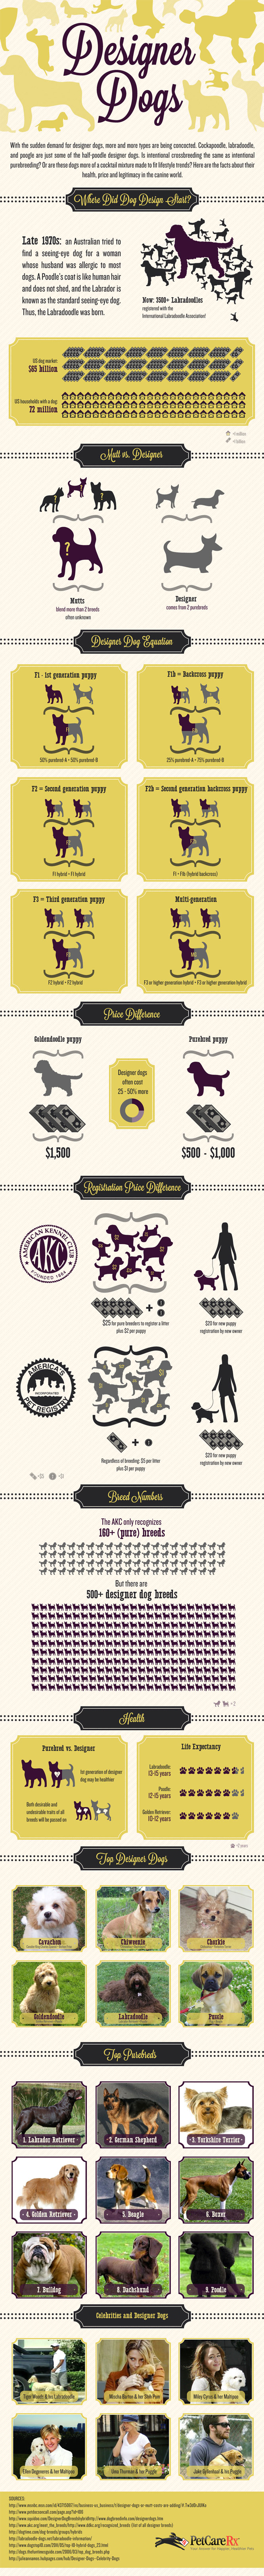 designer dog info graphic